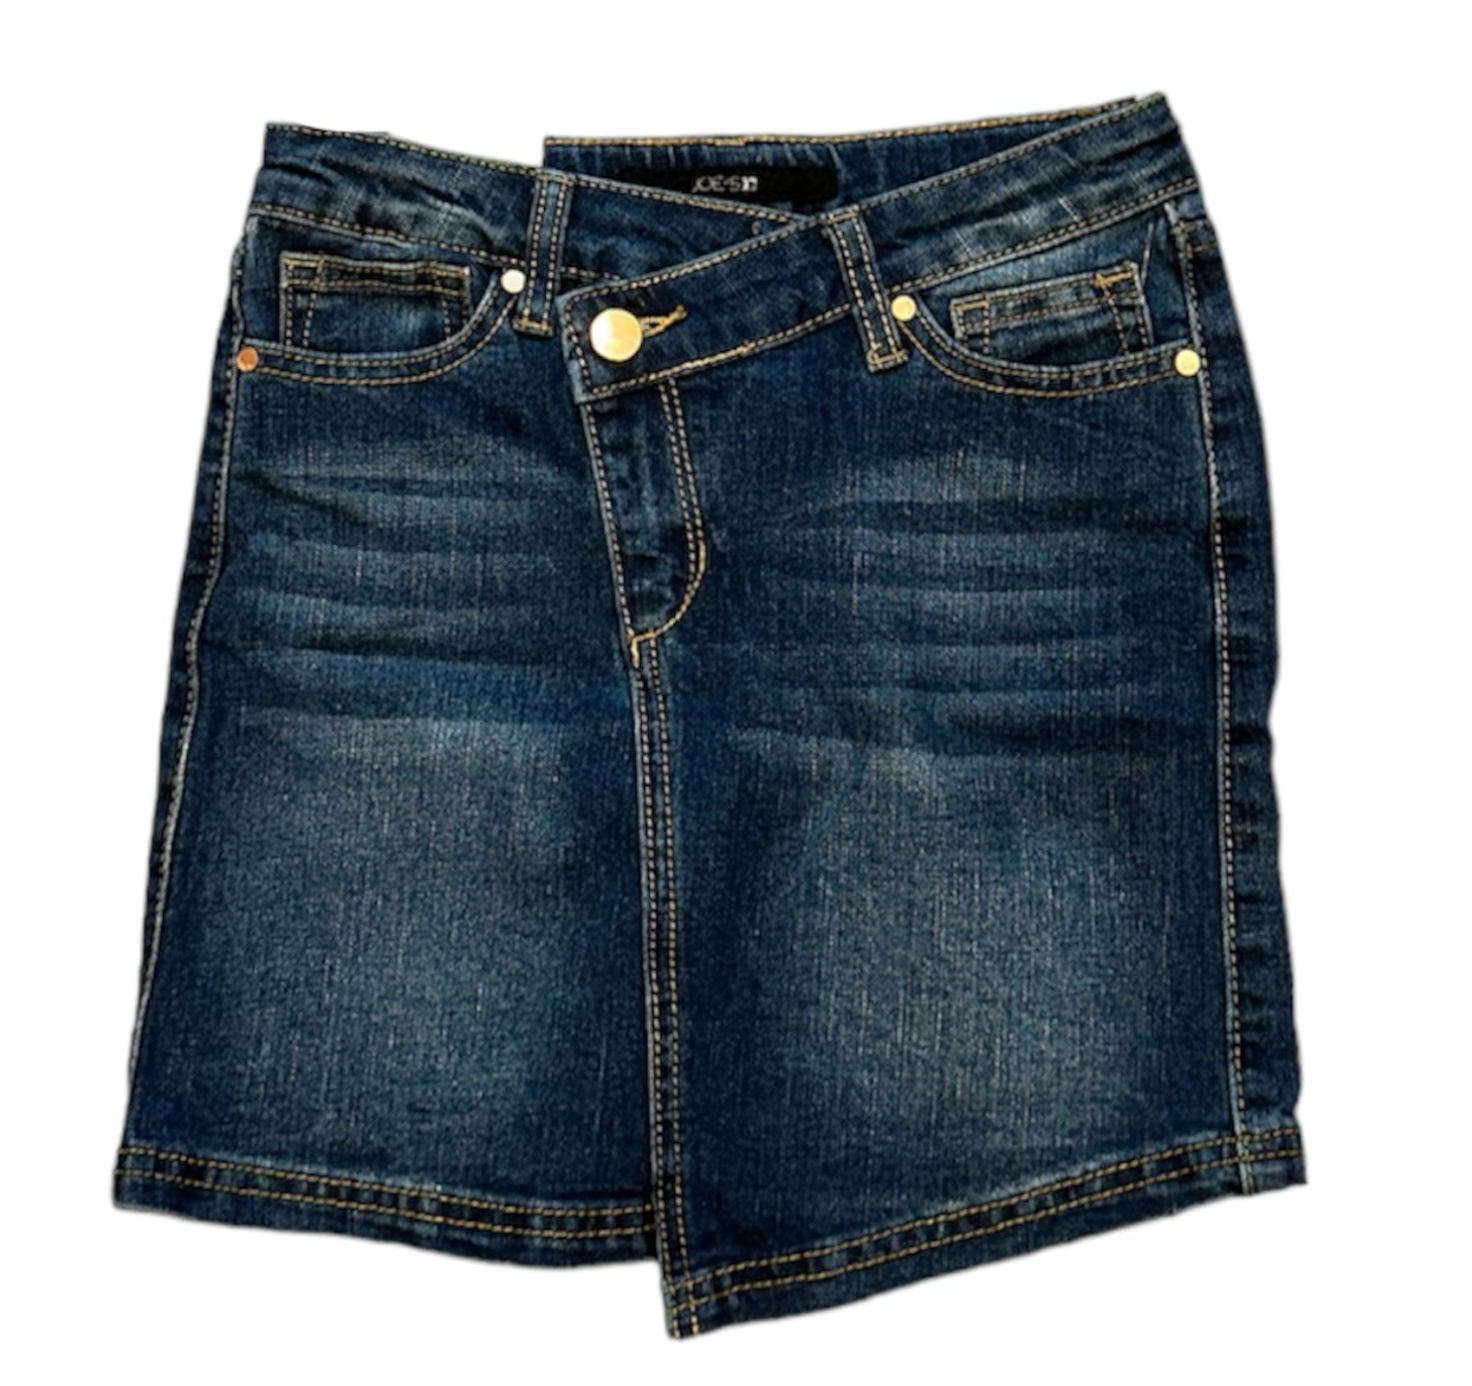 Joes Jeans - Waist Skirt